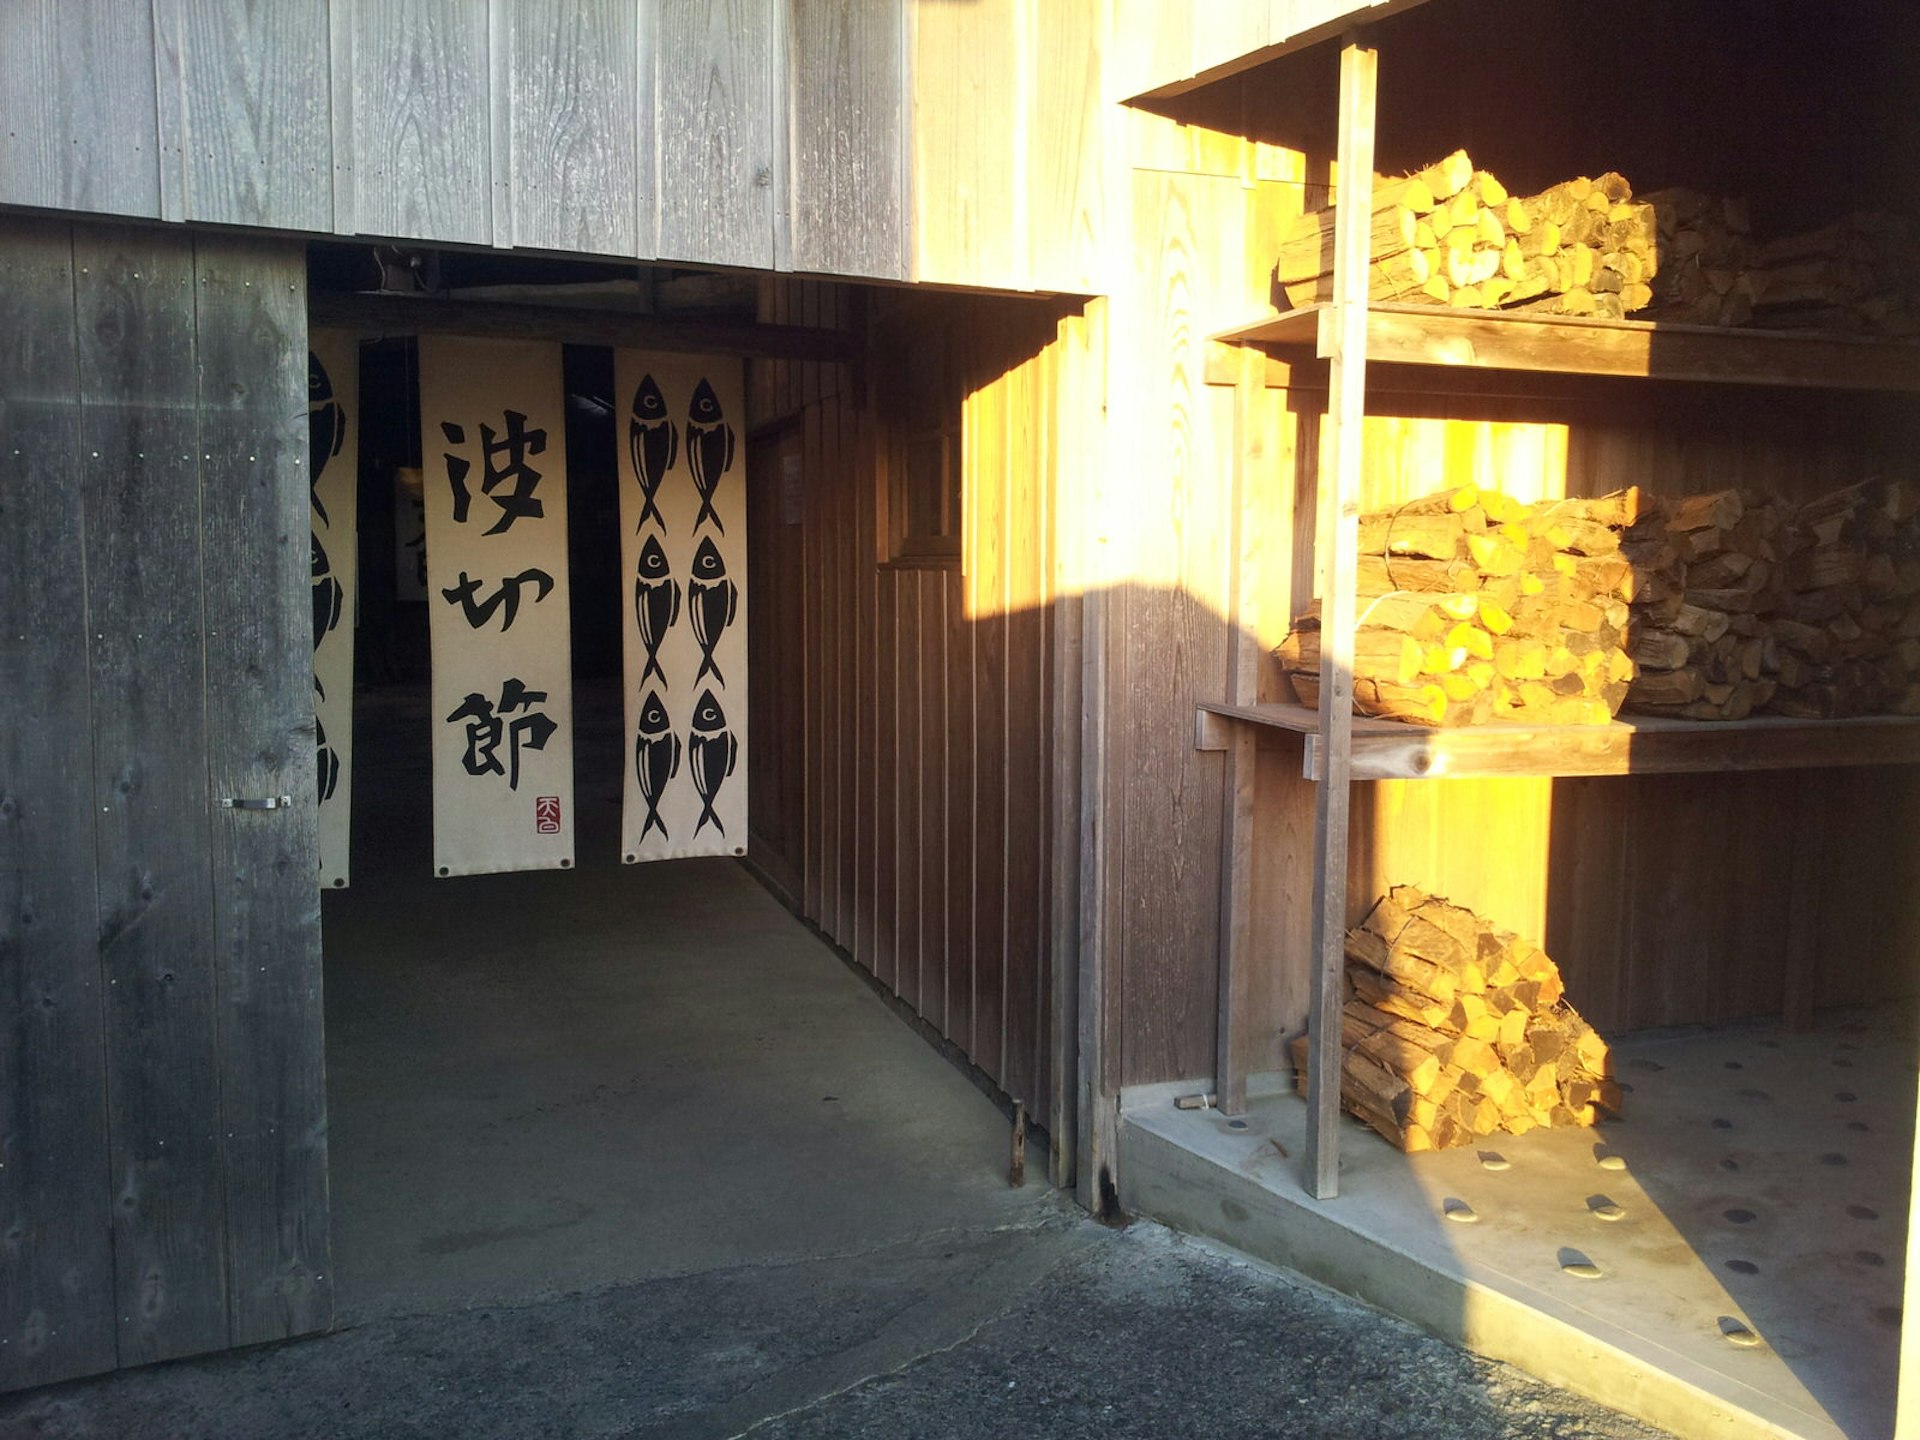 Tenpaku smoking hut, with signs designed by woodblock artist Tokuriki Tomikichirō